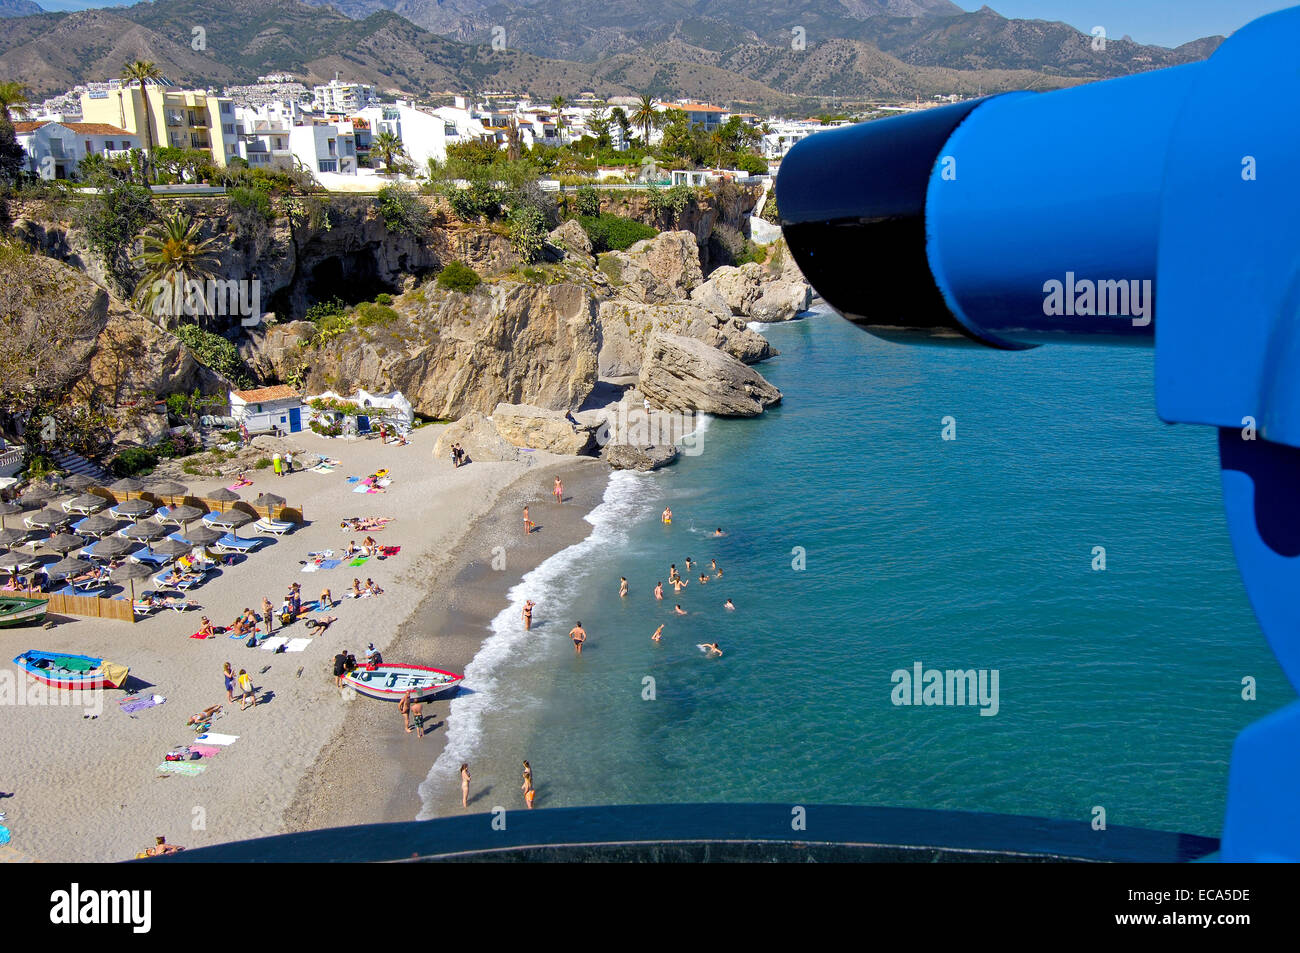 Playa Calahonda, view from Balcon de Europa, Nerja, Costa del Sol, Malaga province, Andalusia, Spain, Europe Stock Photo